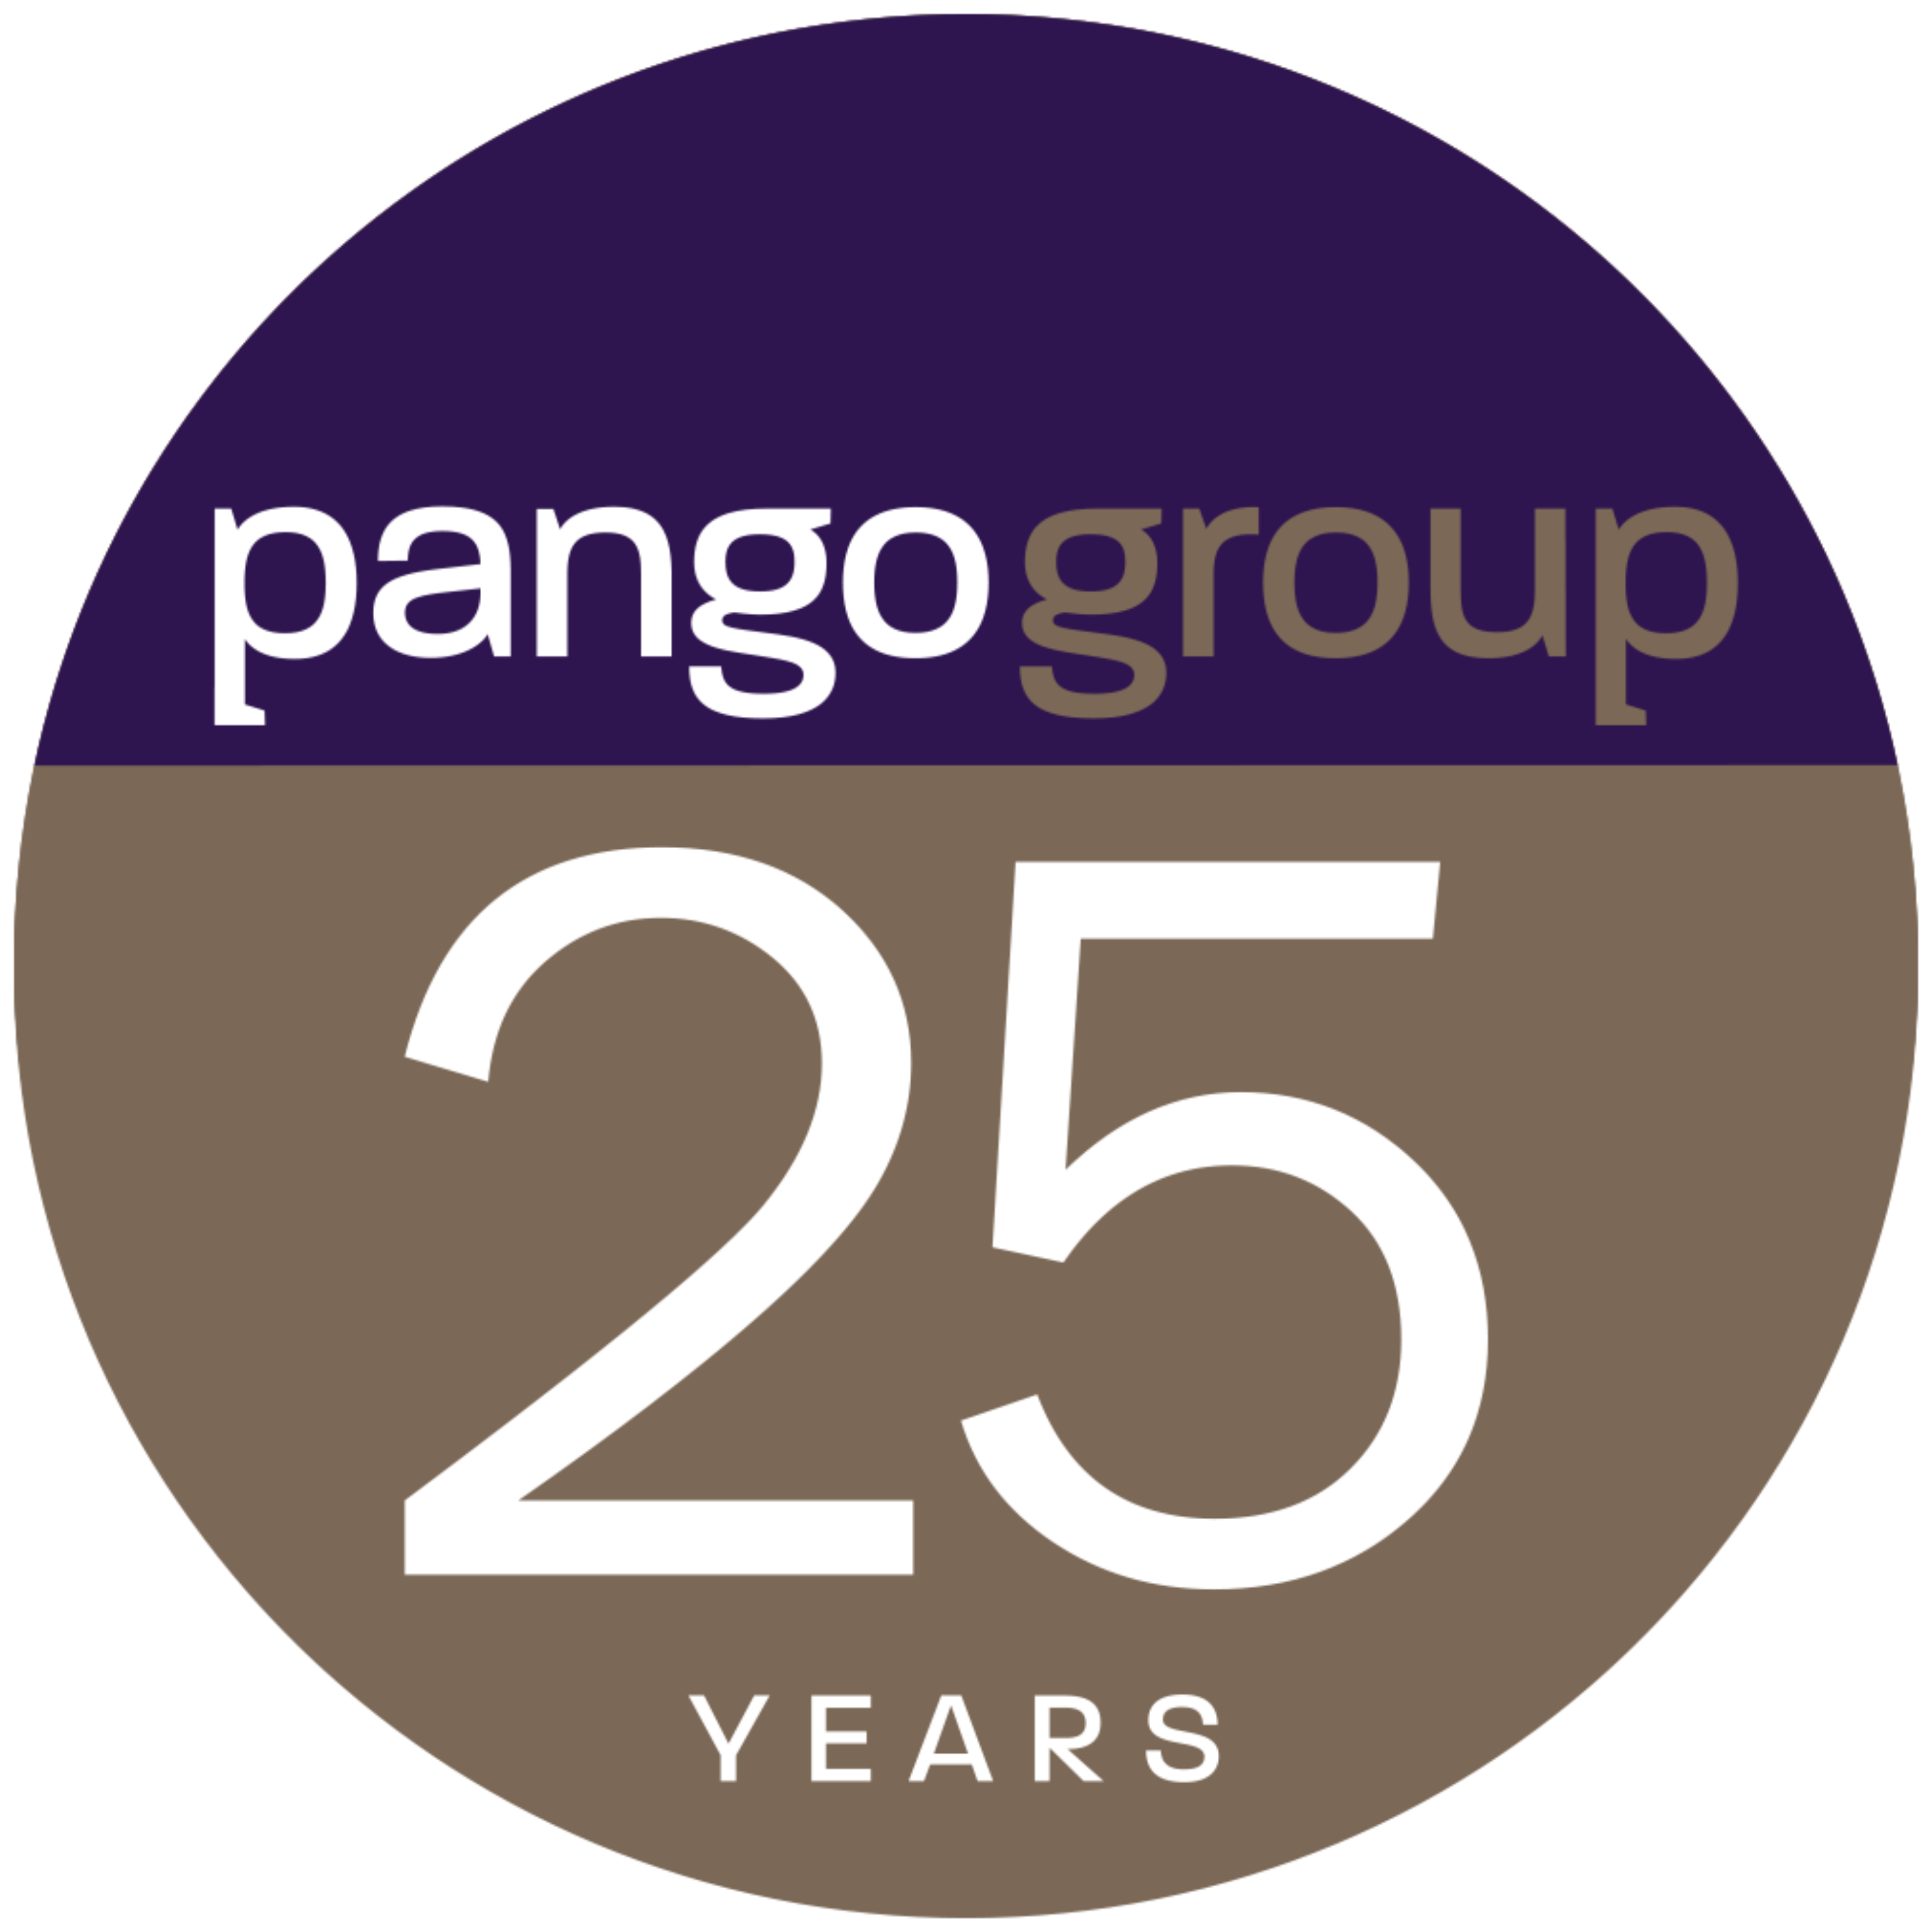 pango group 25 years